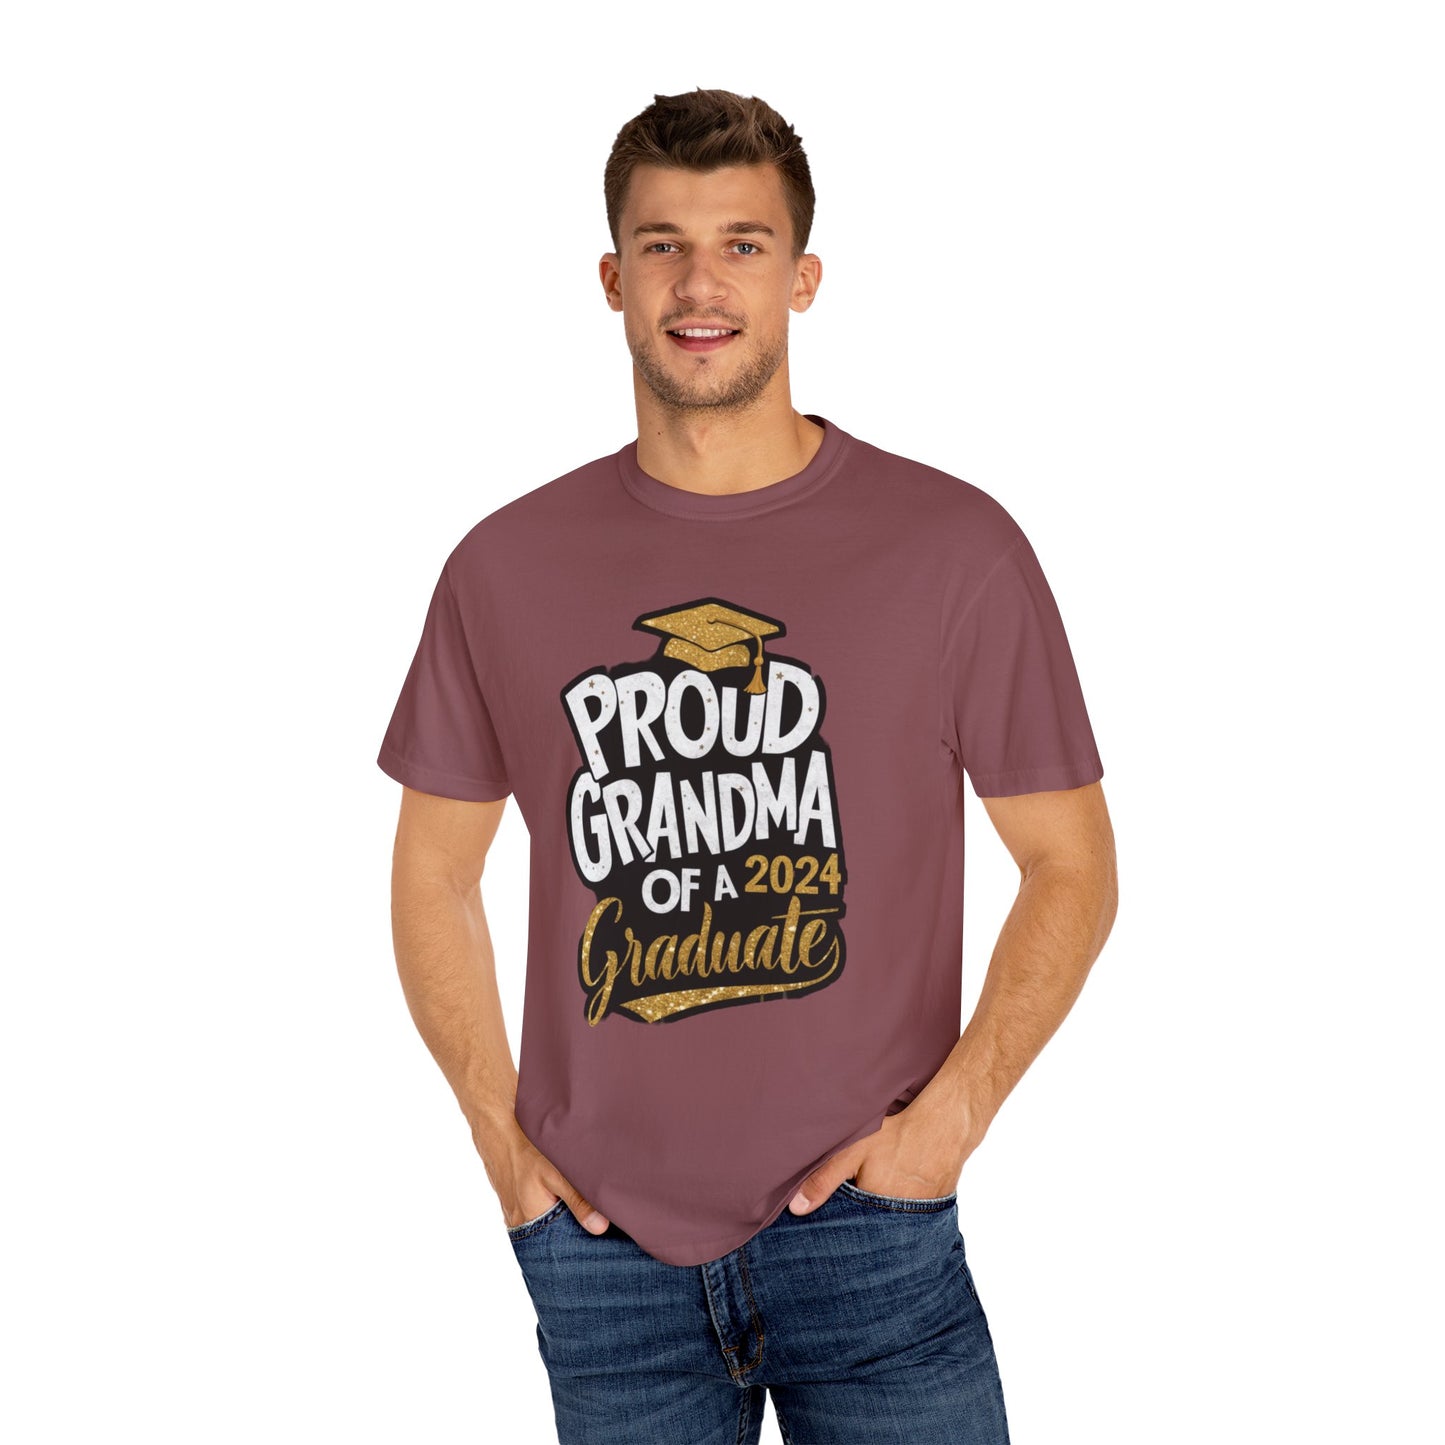 Proud of Grandma 2024 Graduate Unisex Garment-dyed T-shirt Cotton Funny Humorous Graphic Soft Premium Unisex Men Women Brick T-shirt Birthday Gift-30